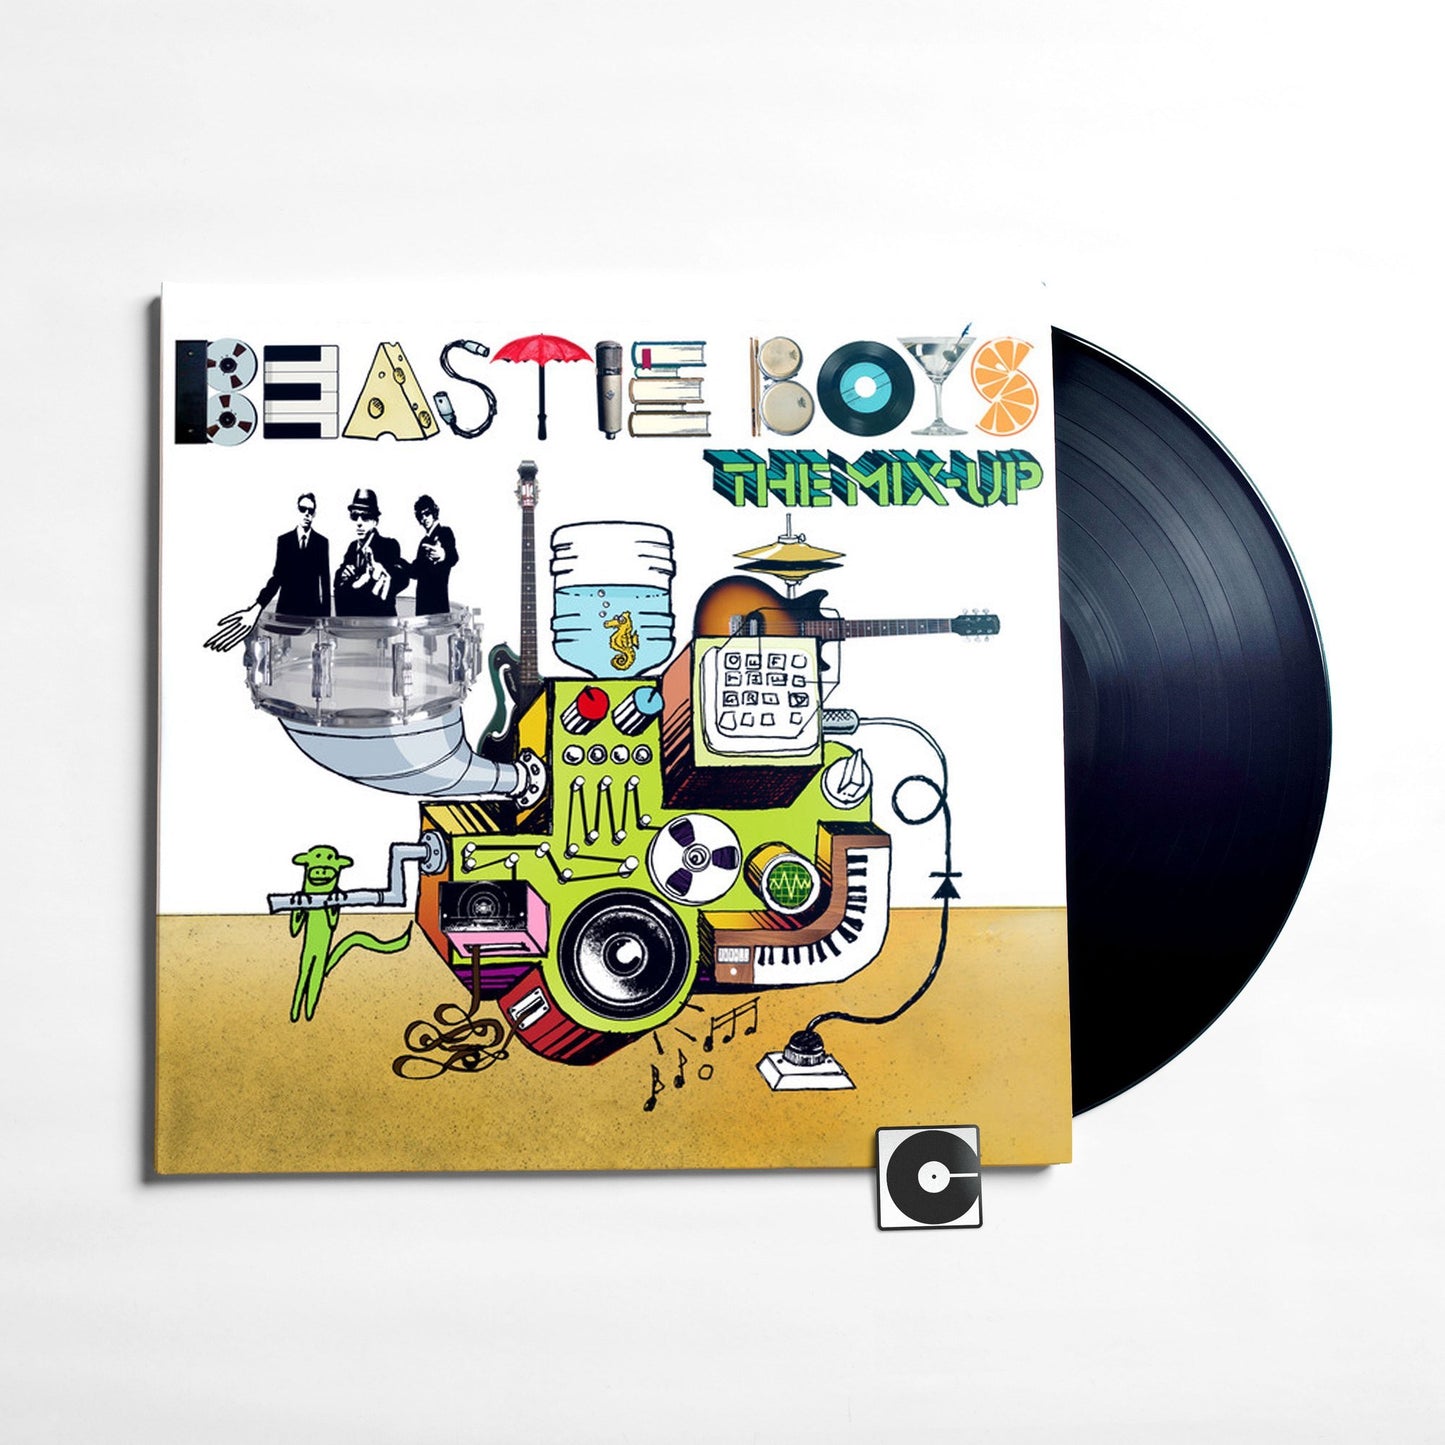 Beastie Boys - "The Mix-Up"